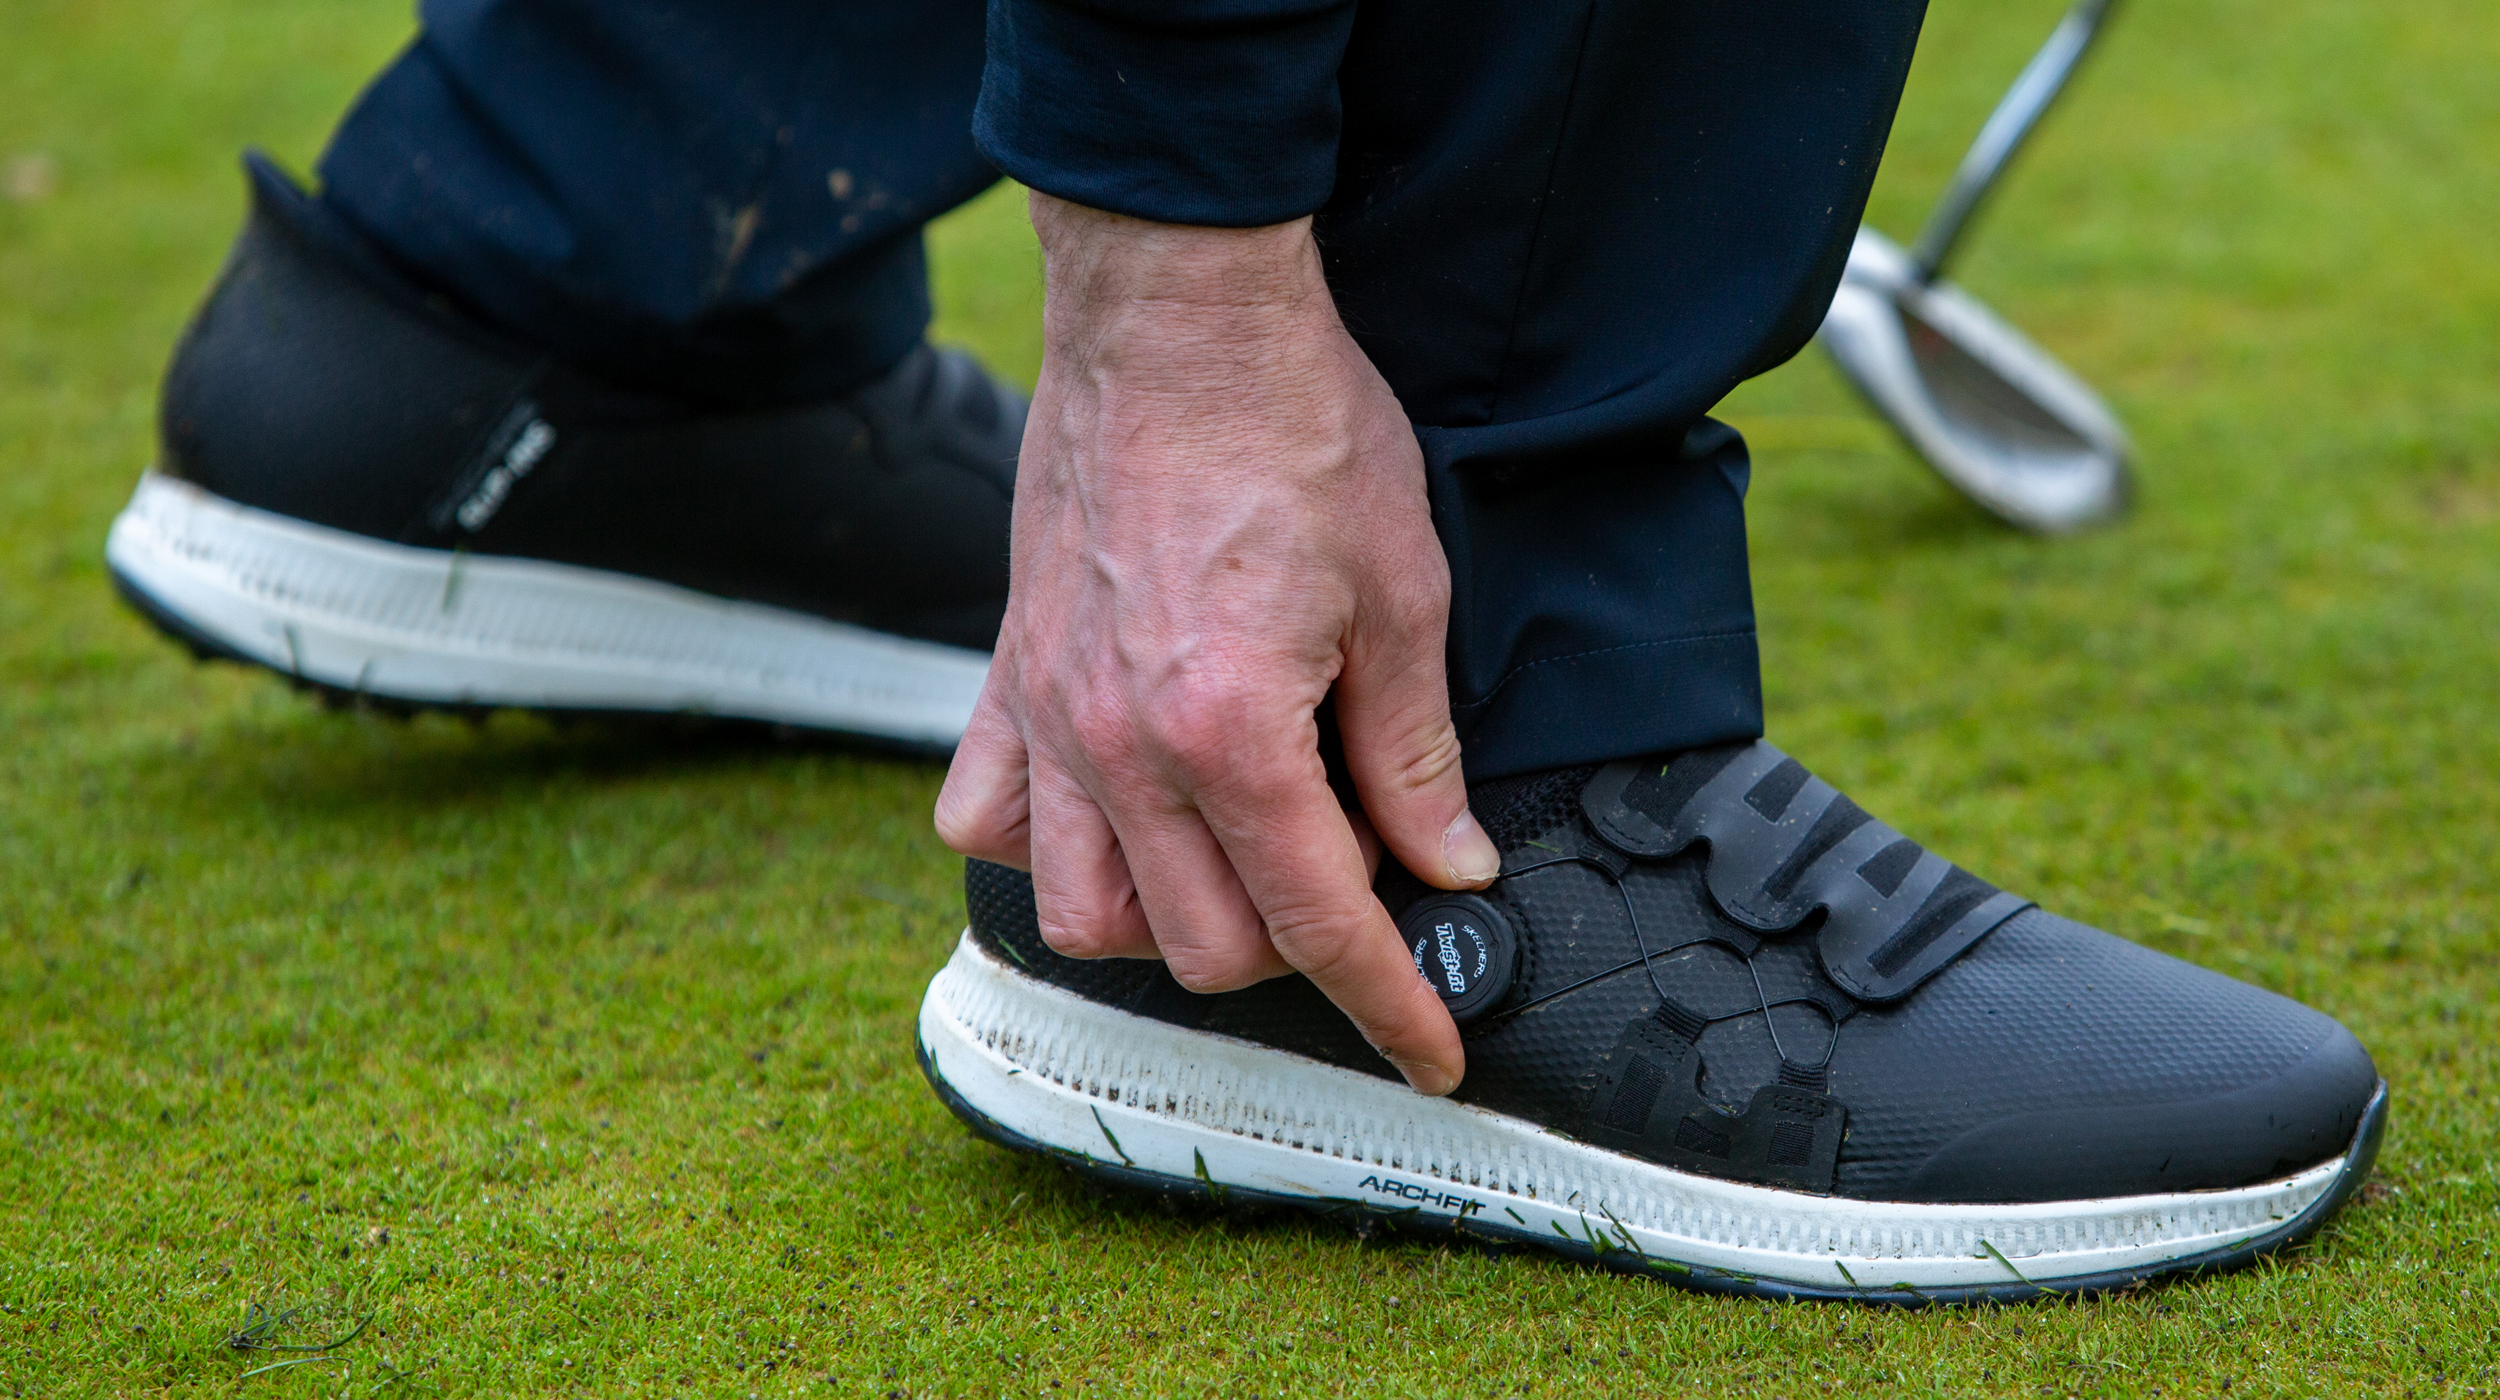 Go Golf Slip 'In Shoe Review | Golf